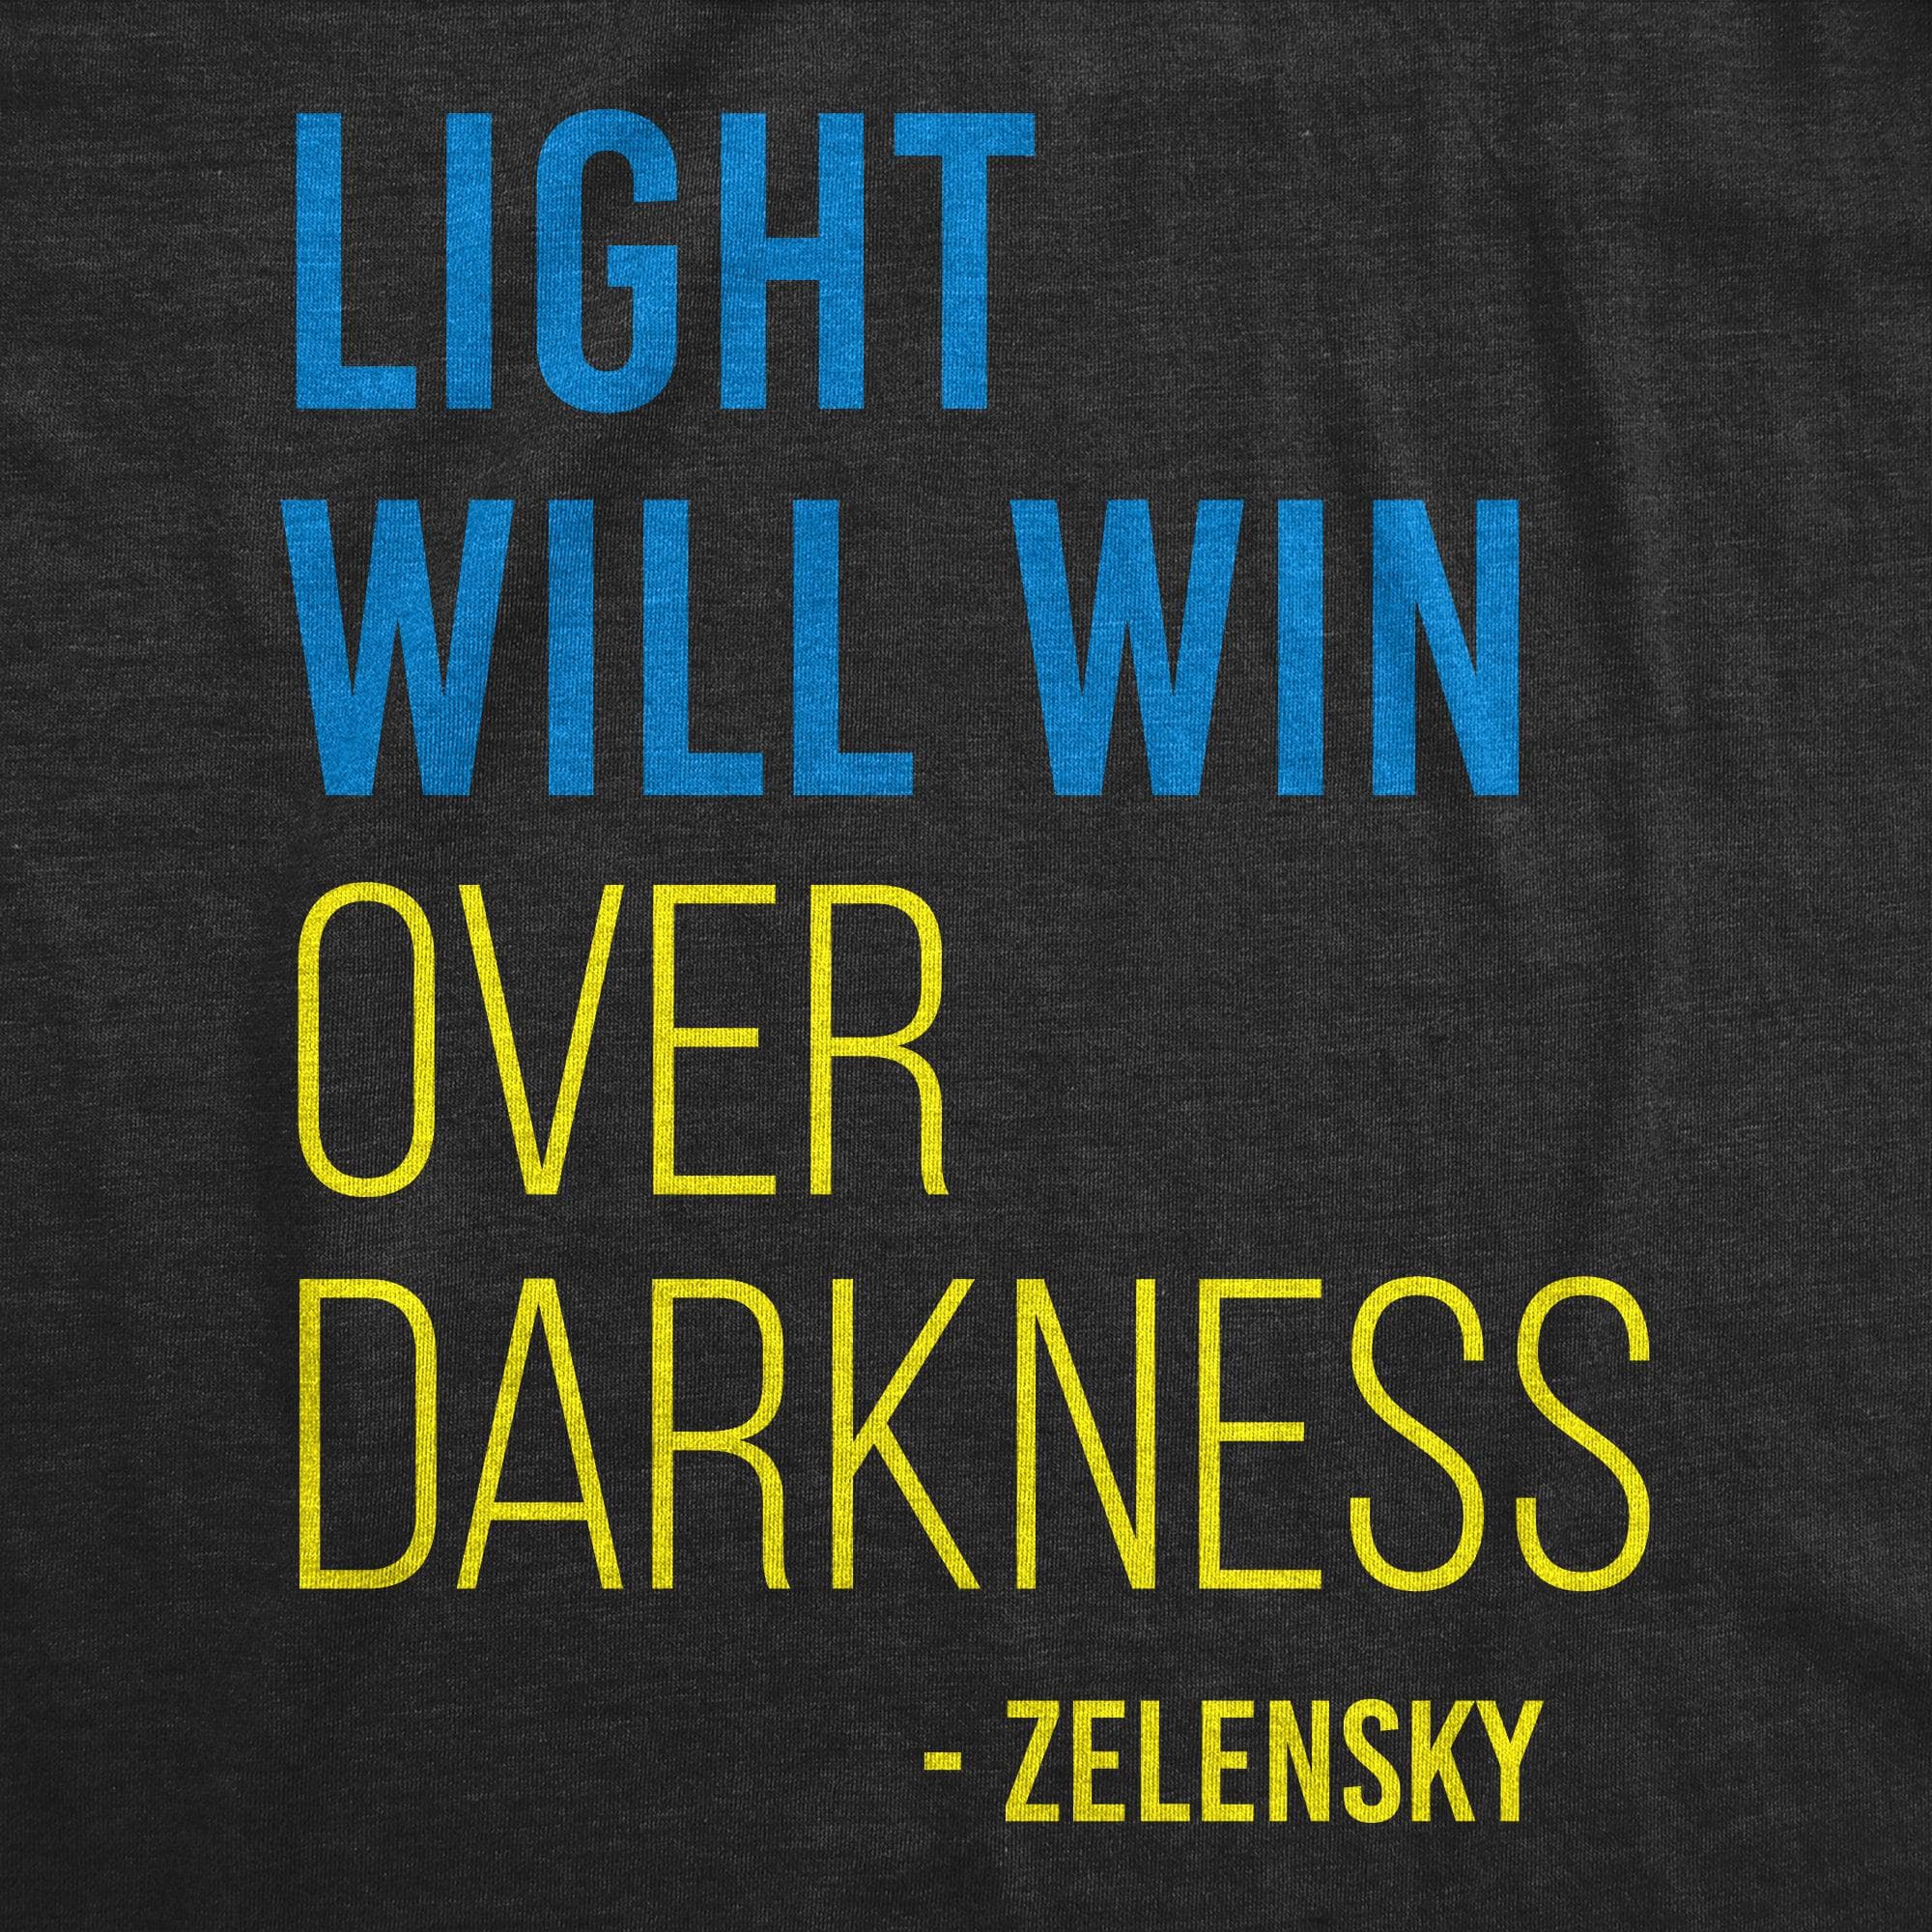 Light Will Win Over Darkness Women's Tshirt  -  Crazy Dog T-Shirts